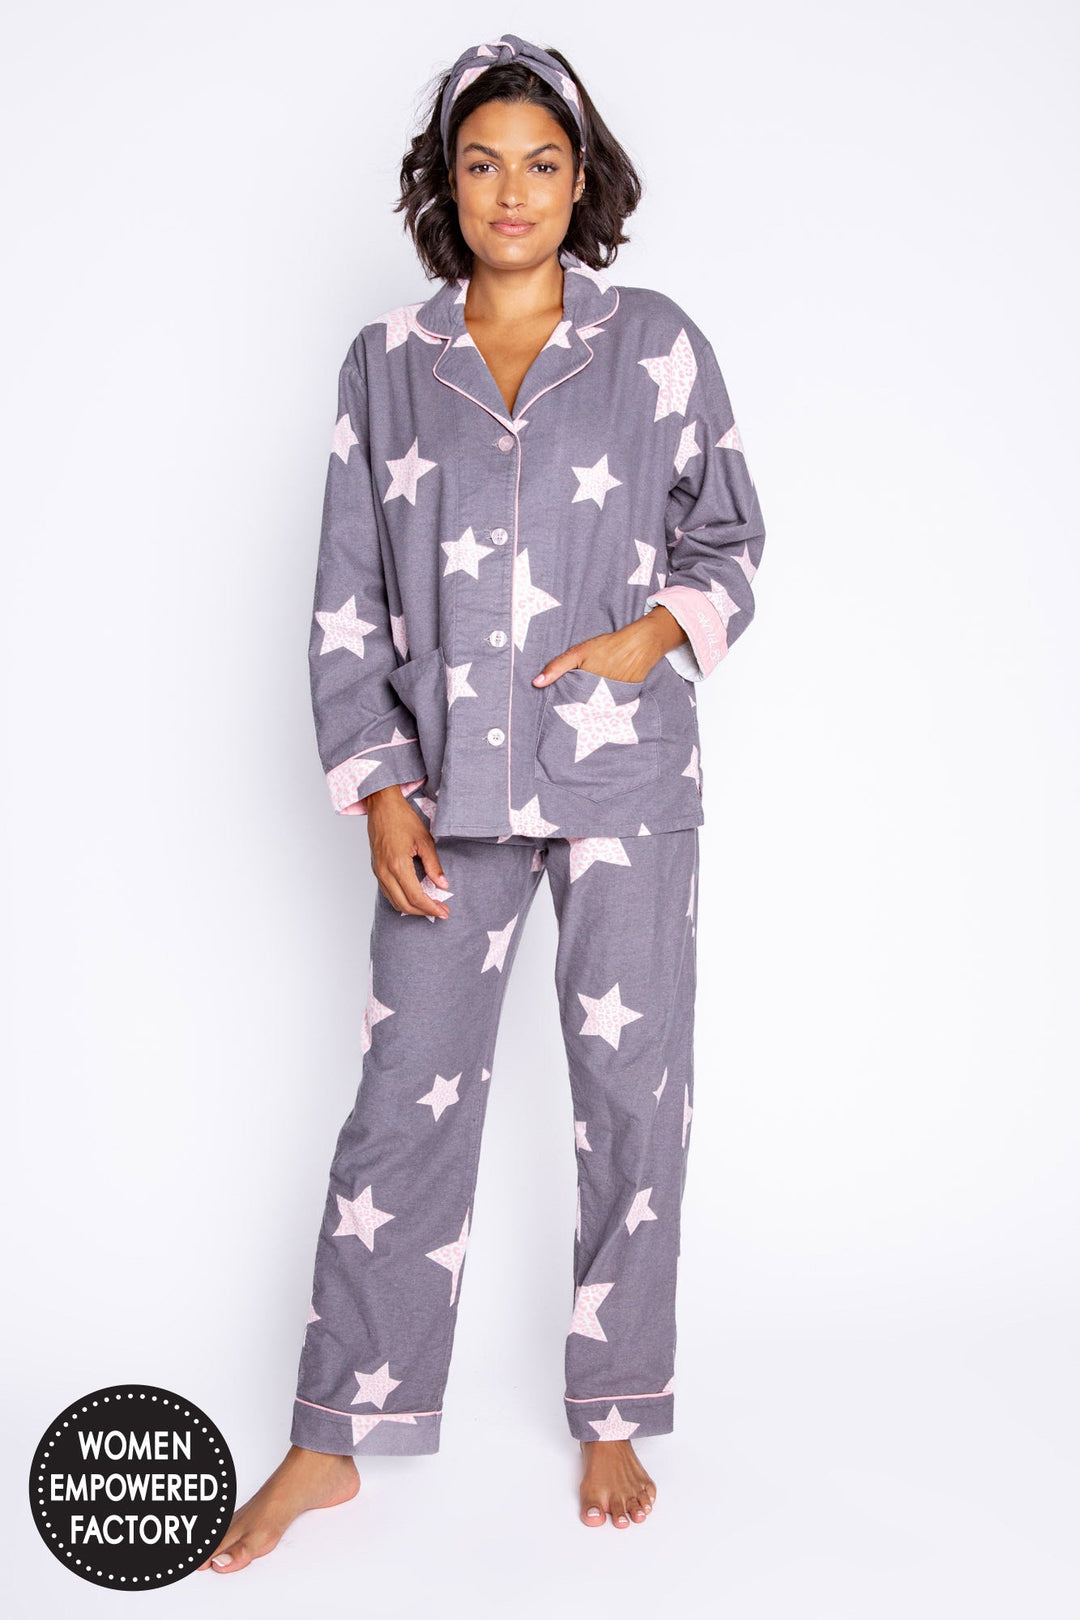 PJ Salvage Playful Prints Butterflies Cotton Jersey Classic Pajama